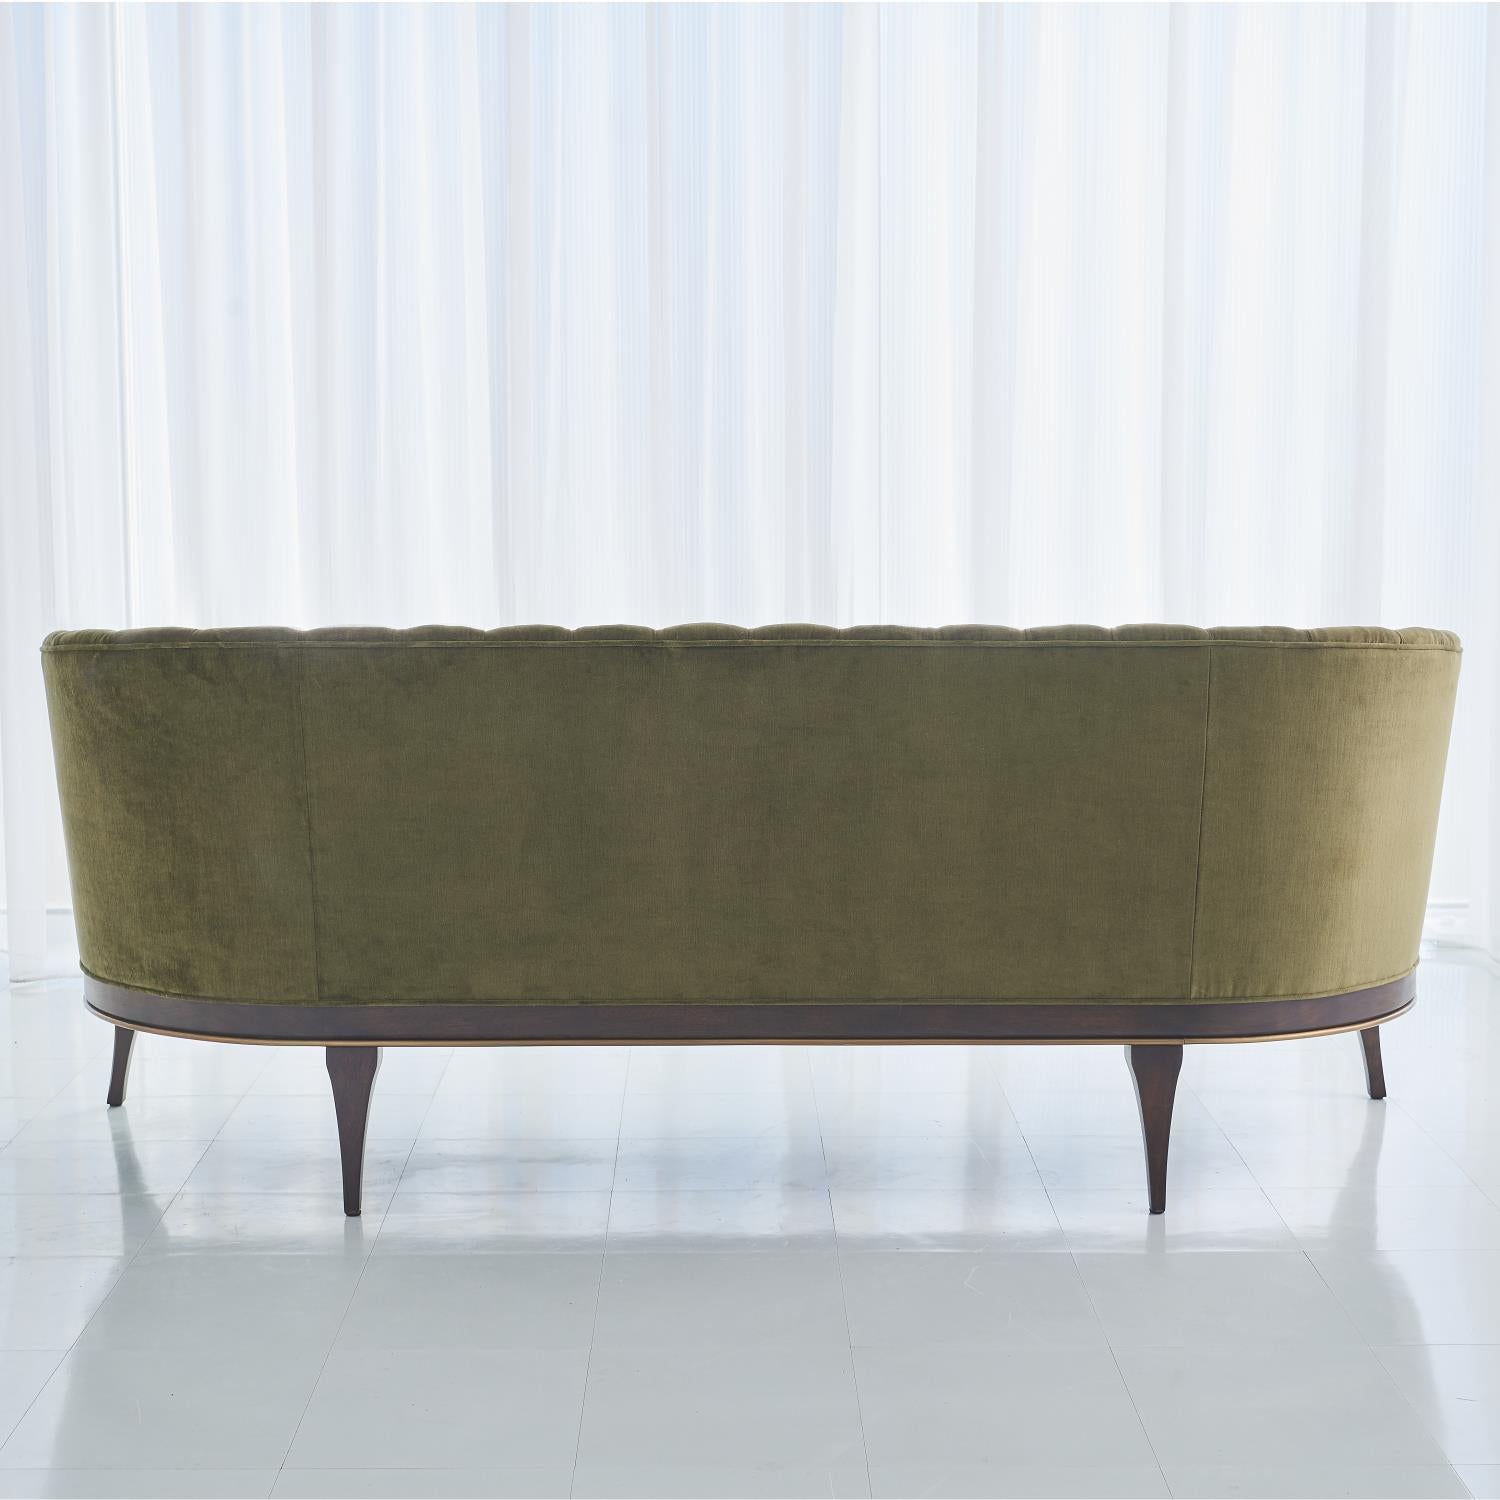 Channel Back Sofa - Moss - Grats Decor Interior Design & Build Inc.